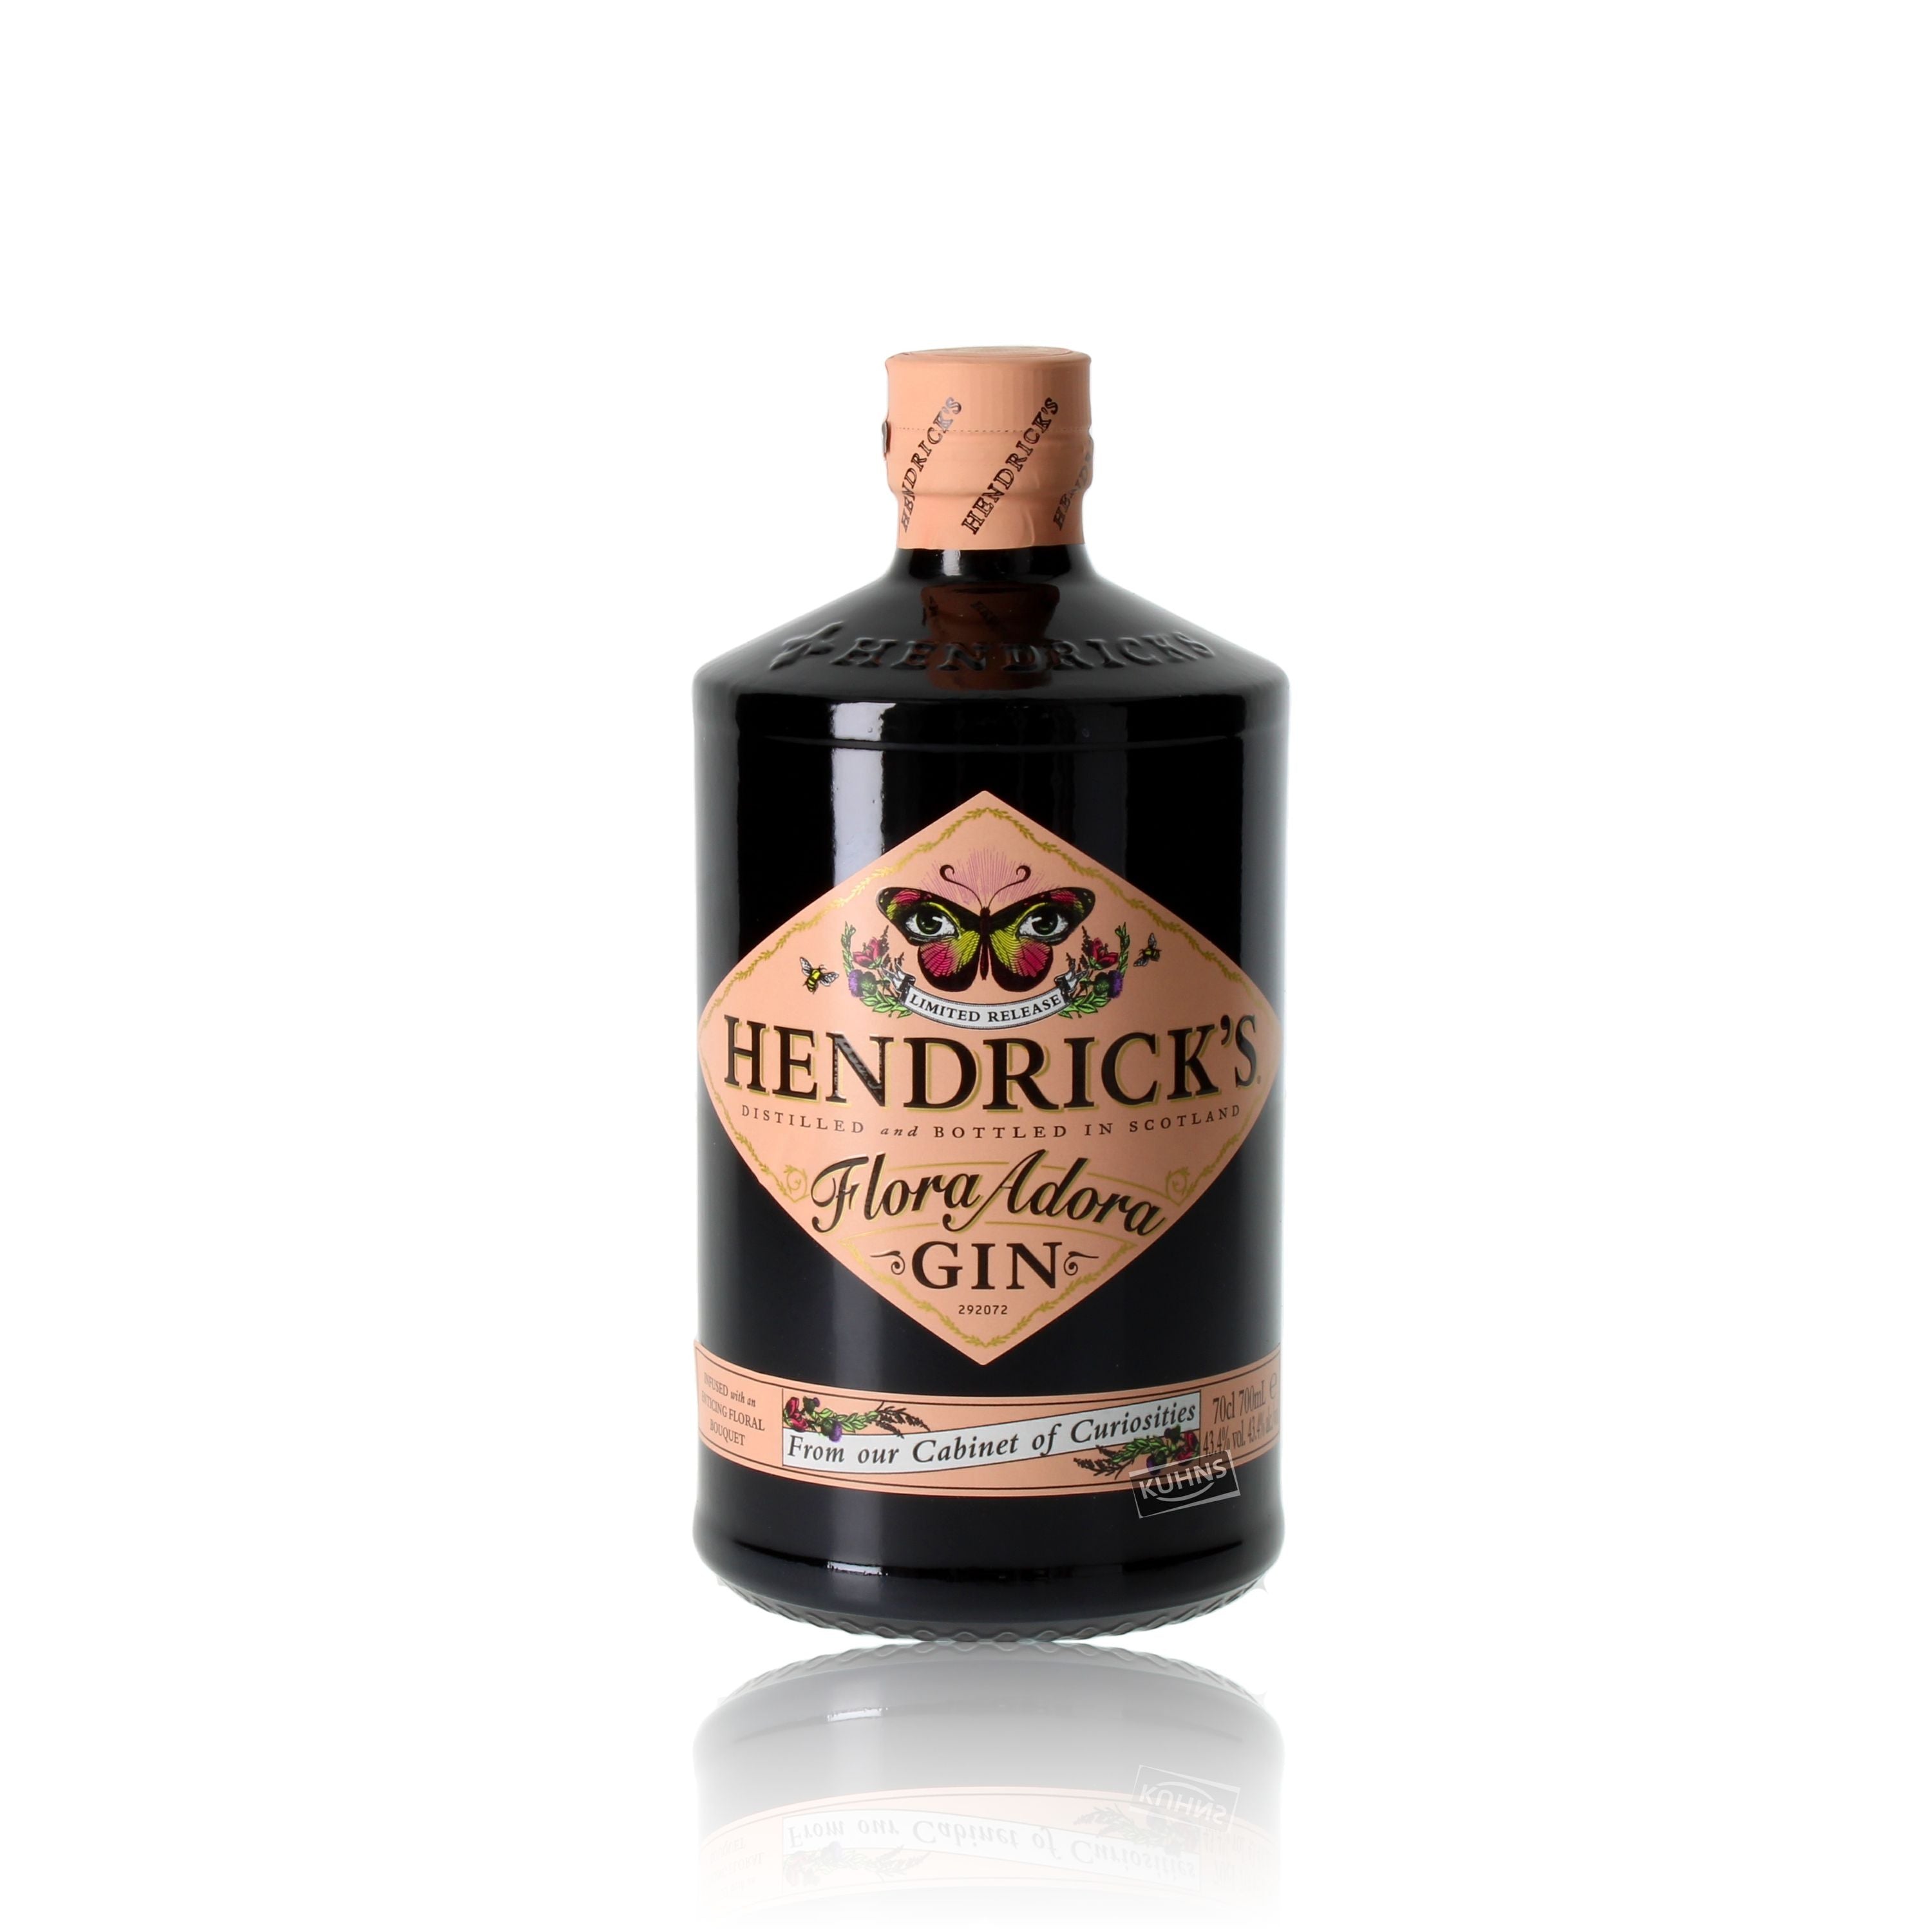 Hendrick's Flora Adora Gin 0,7l, alc. 43,4 Vol.-%, Gin Schottland